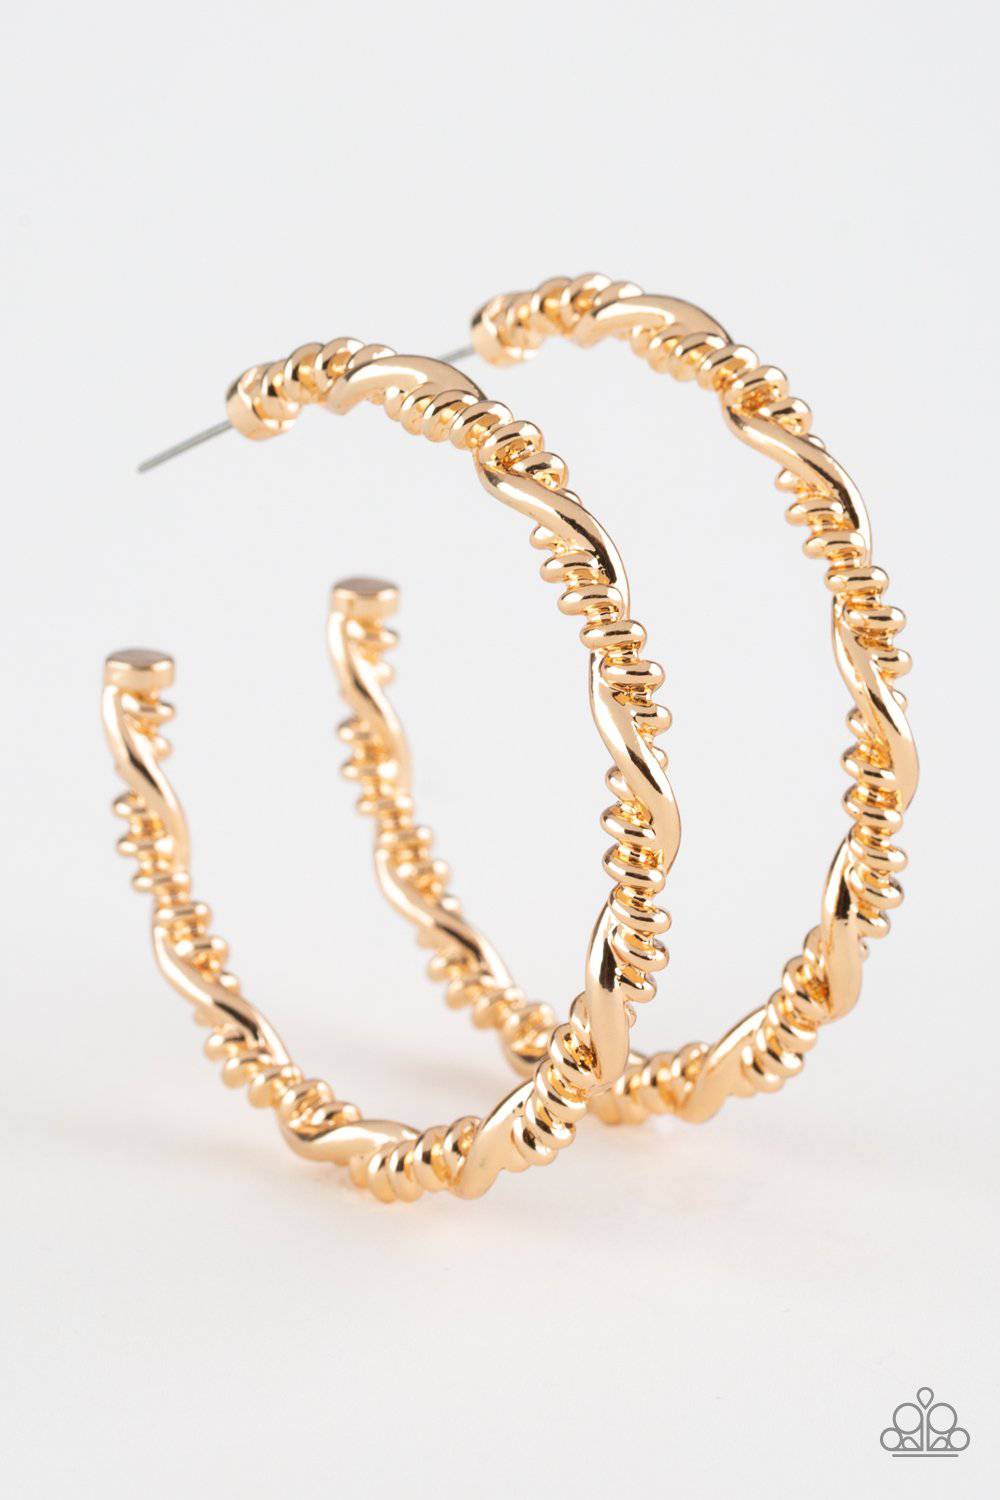 Street Mod - Gold Hoop Earrings - Paparazzi Accessories - GlaMarous Titi Jewels